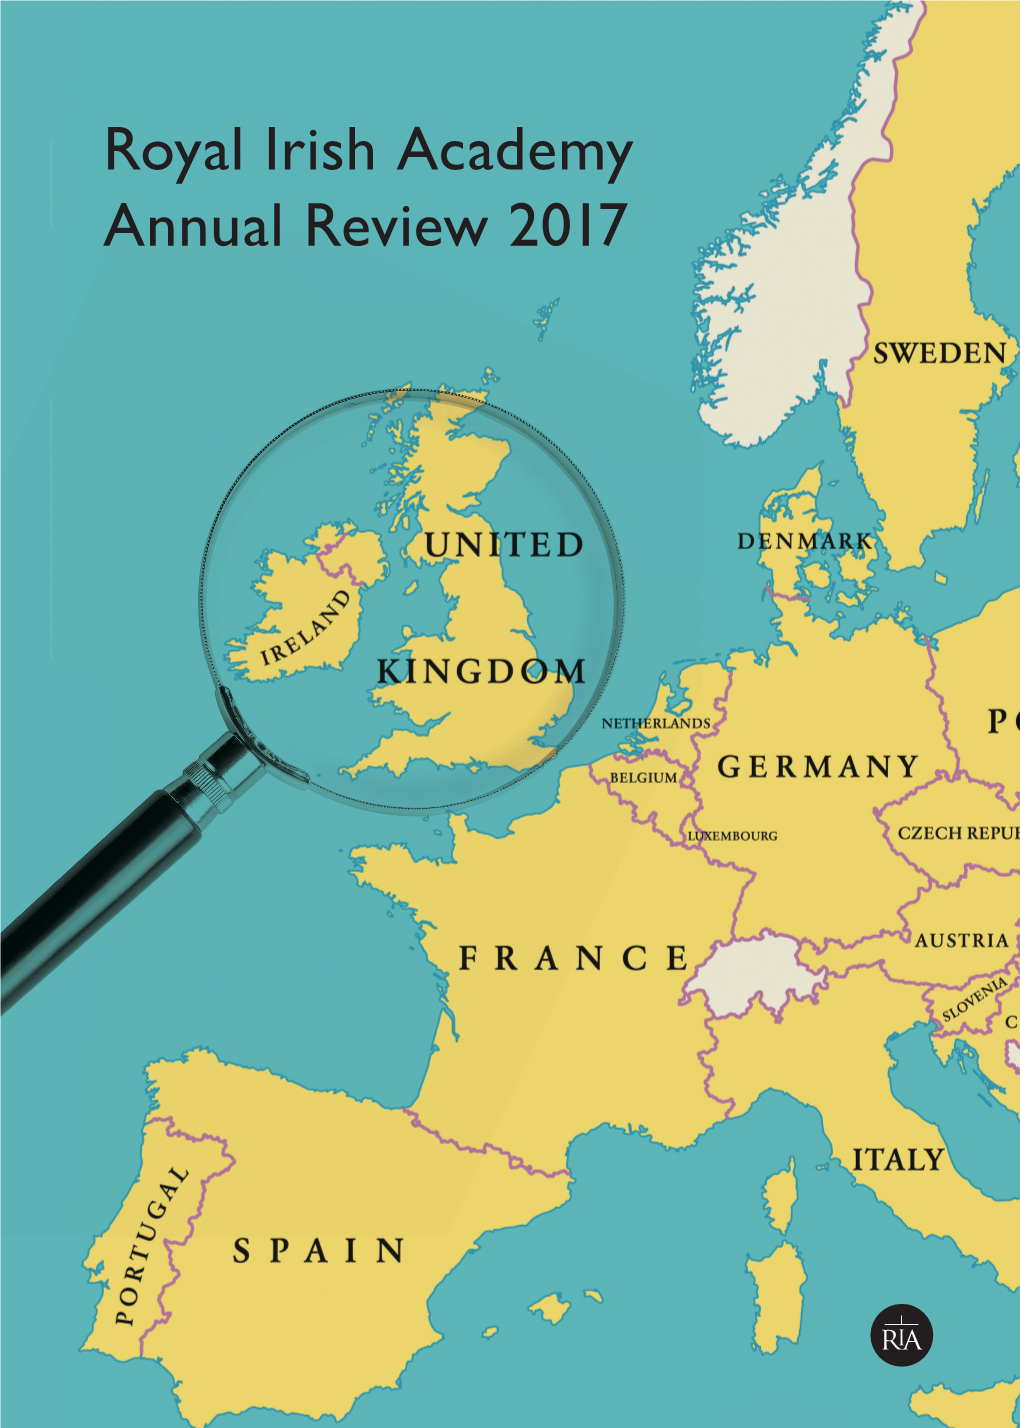 Royal Irish Academy Annual Review 2017